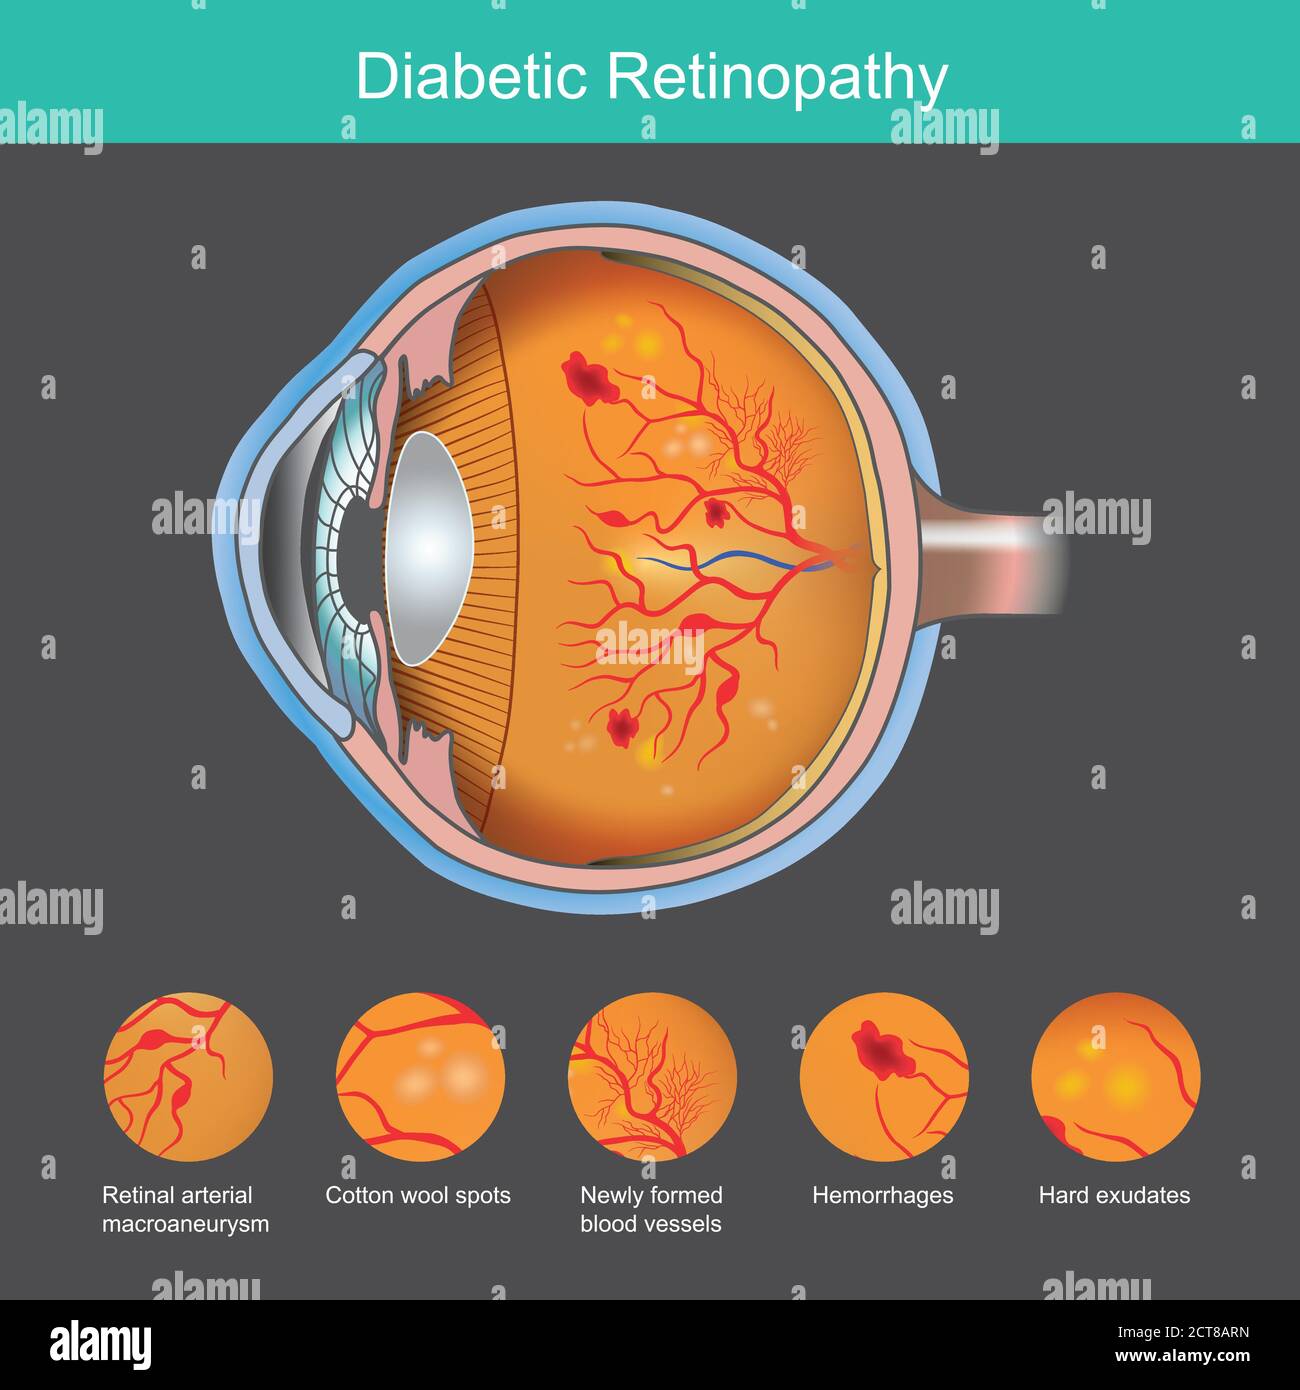 Diabetic Retinopathy. Illustration abnormality the retina from symptoms the diabetic retinopathy. Stock Vector